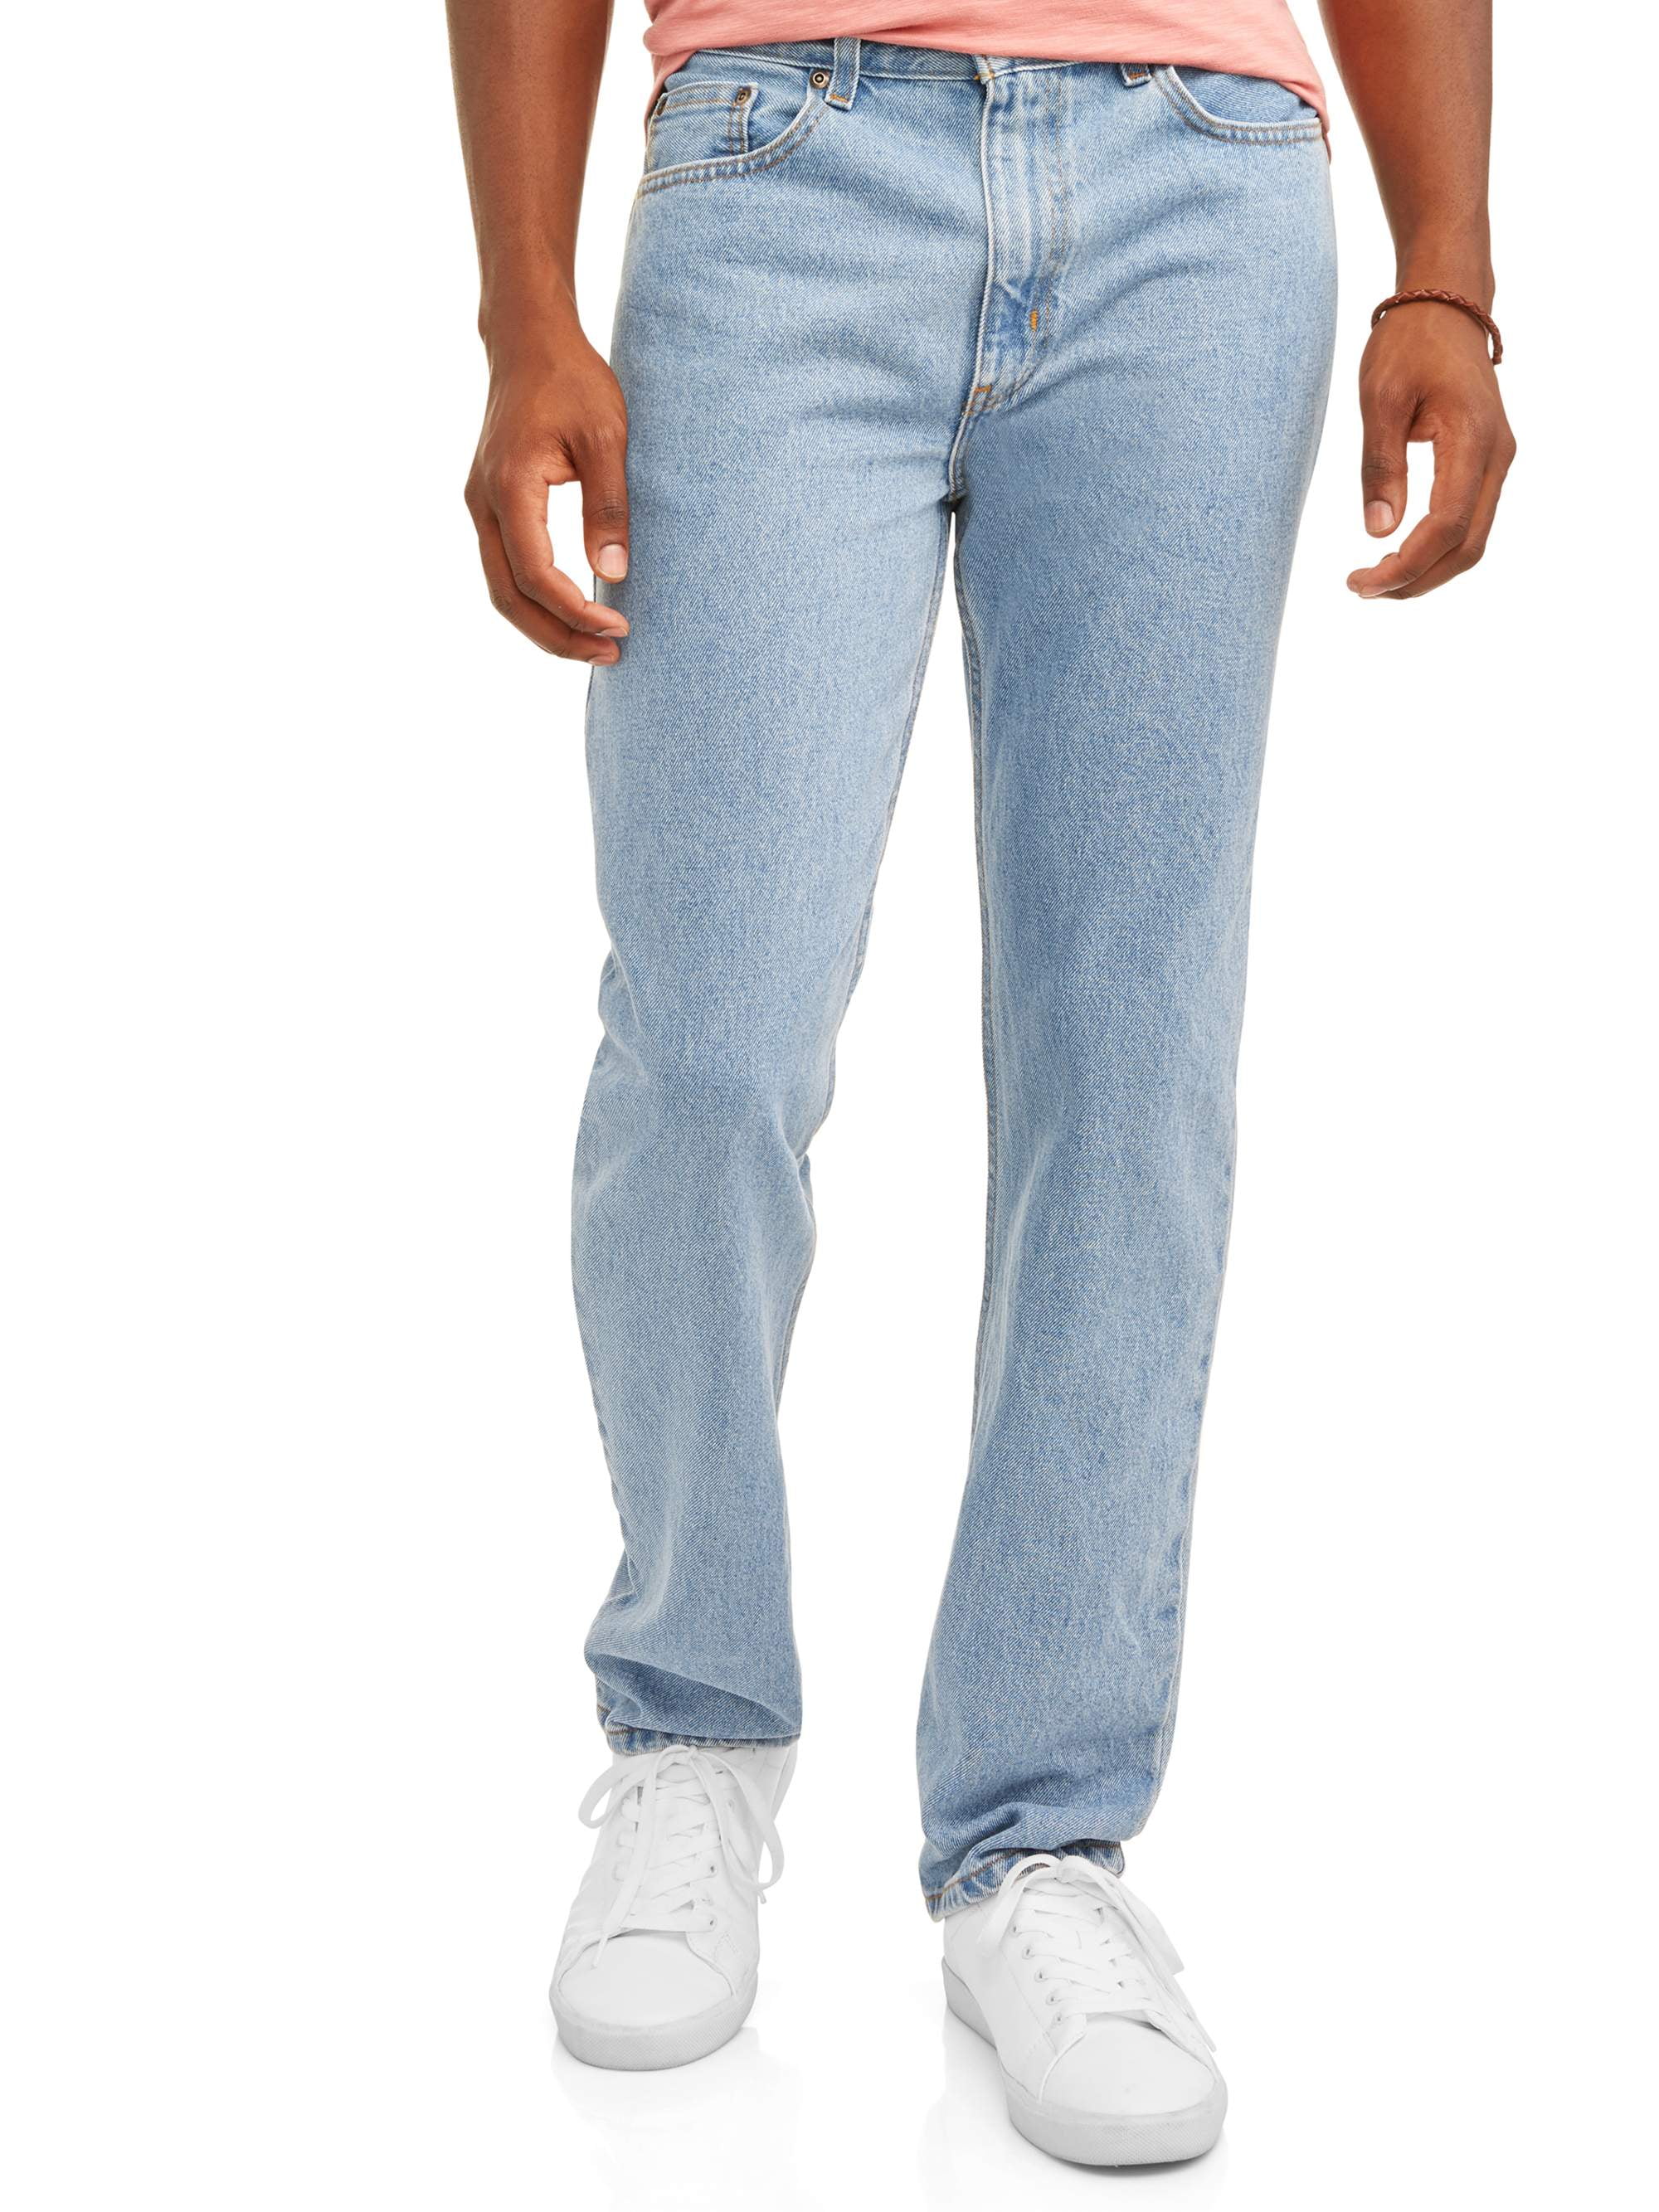 area Quadrant skirt George Men's Regular Fit Jeans - Walmart.com